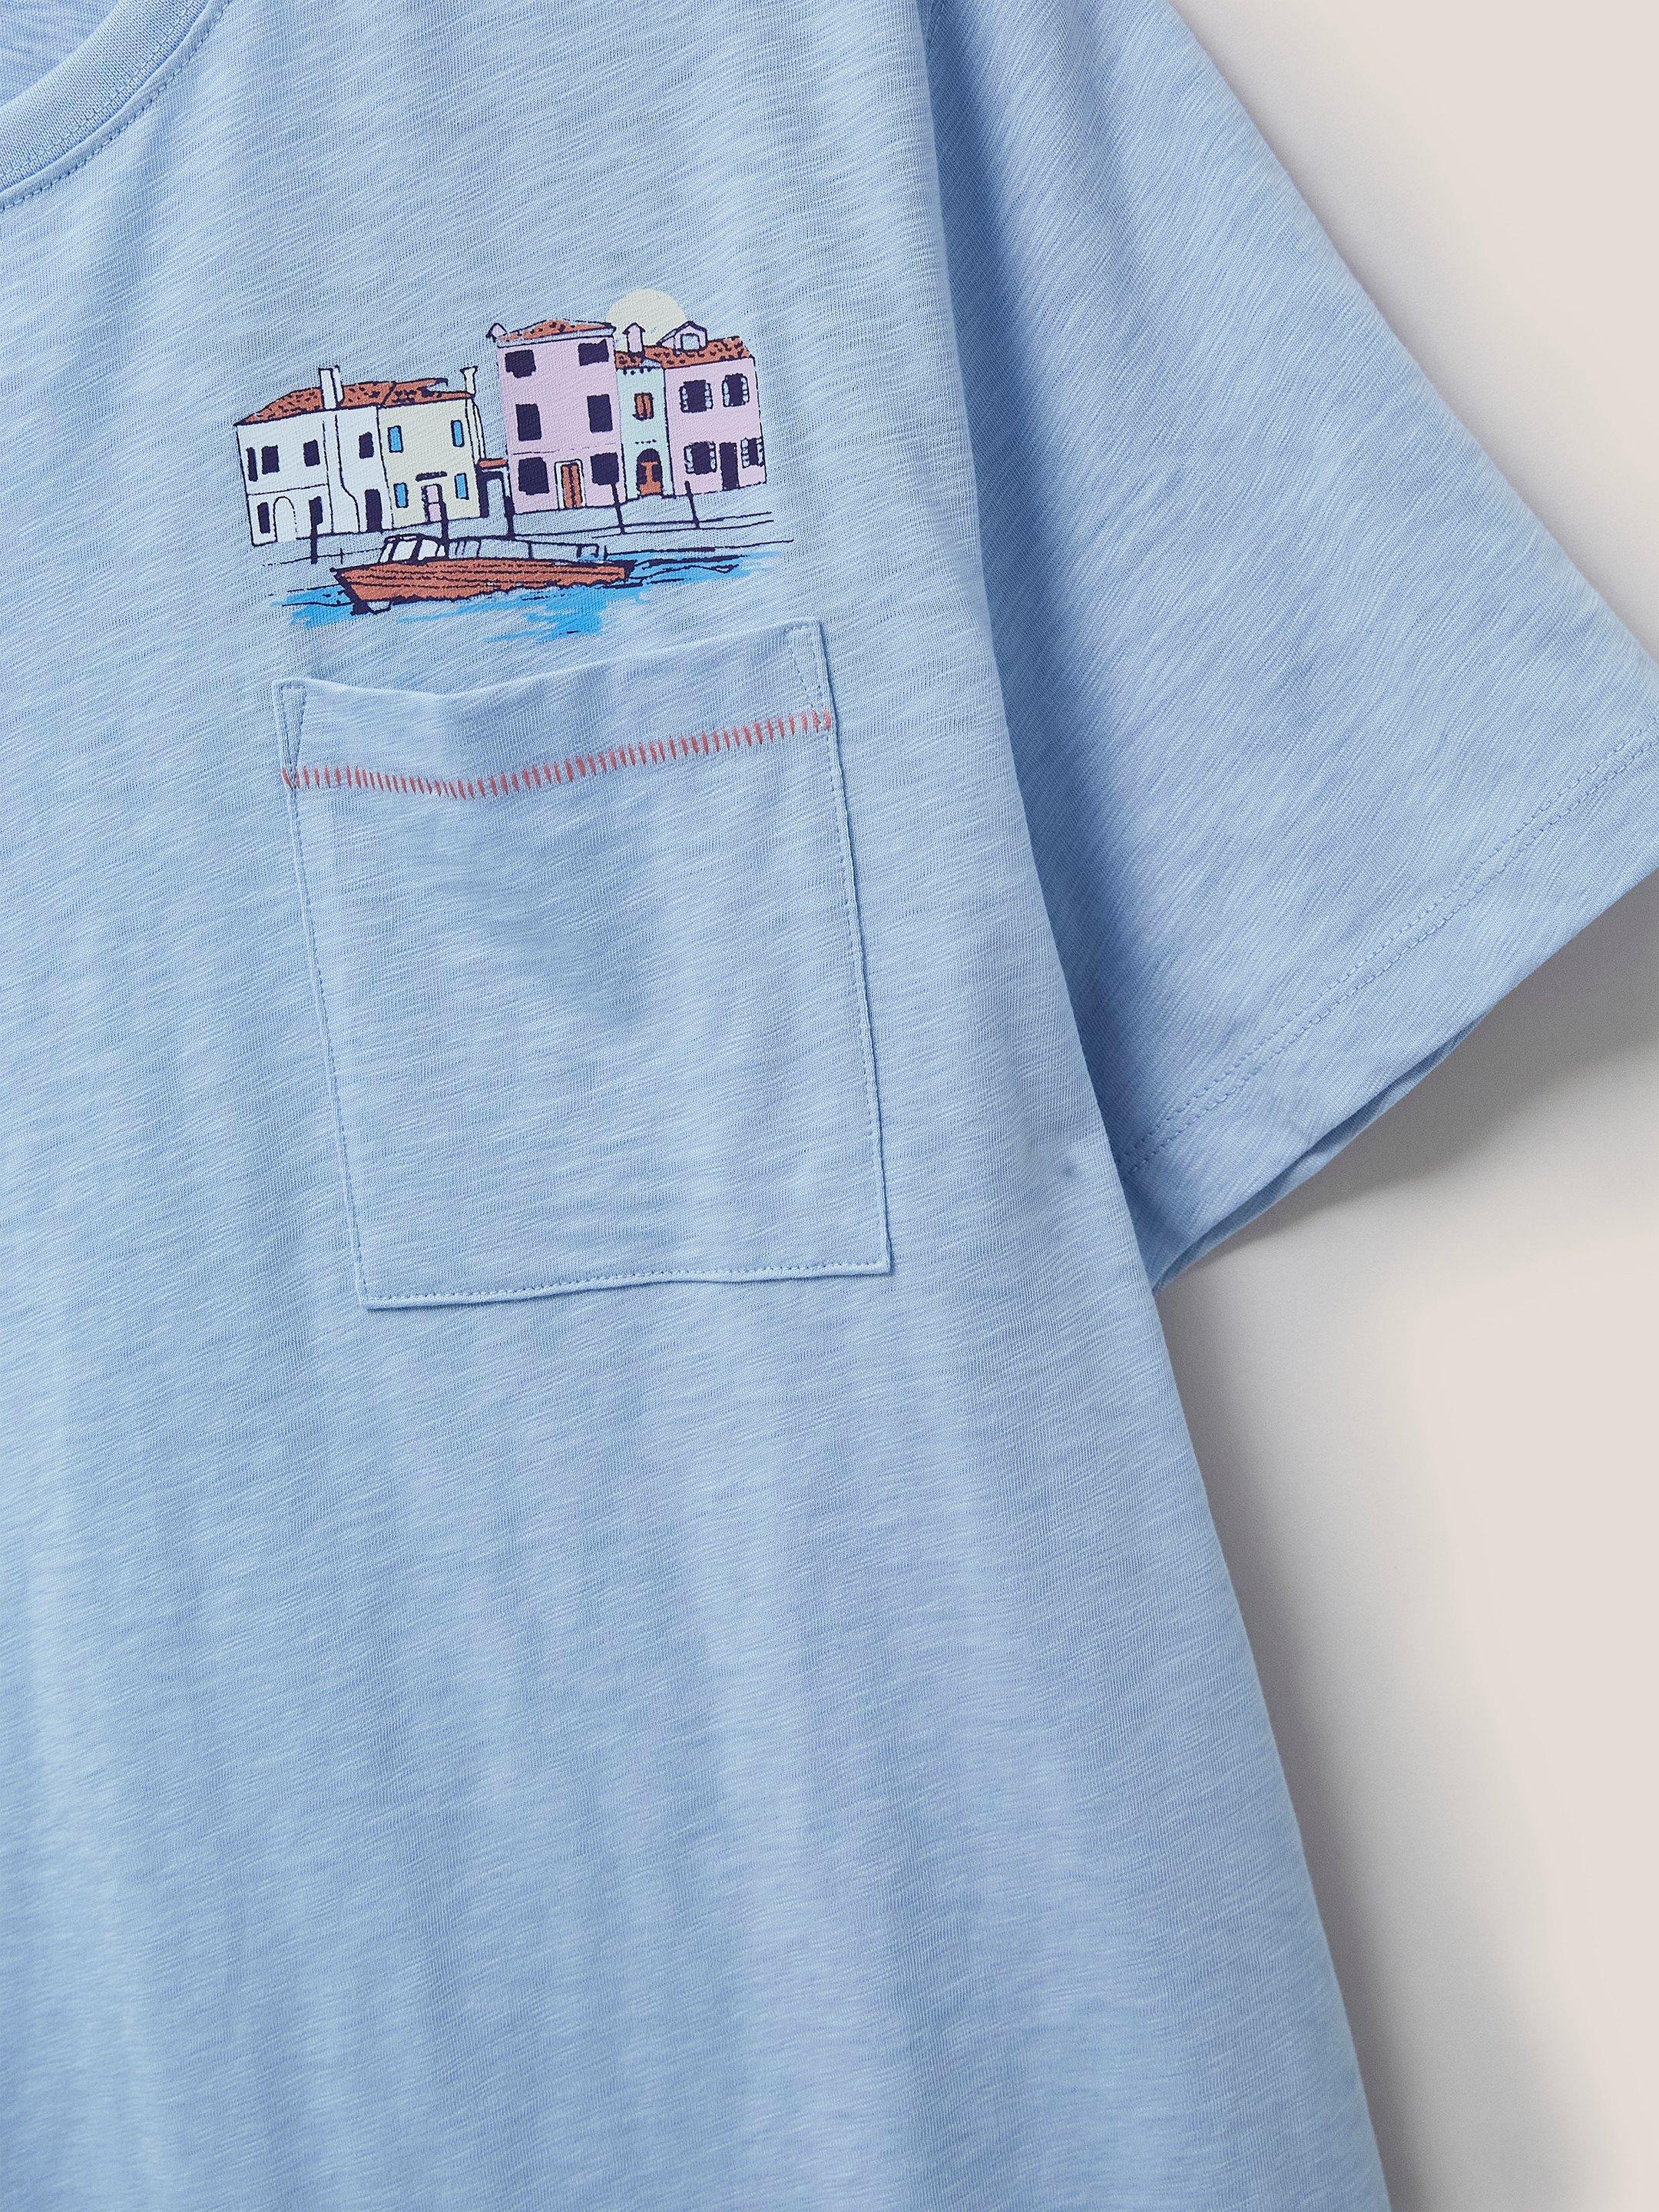 Waterside Graphic Tshirt in LGT BLUE - FLAT DETAIL